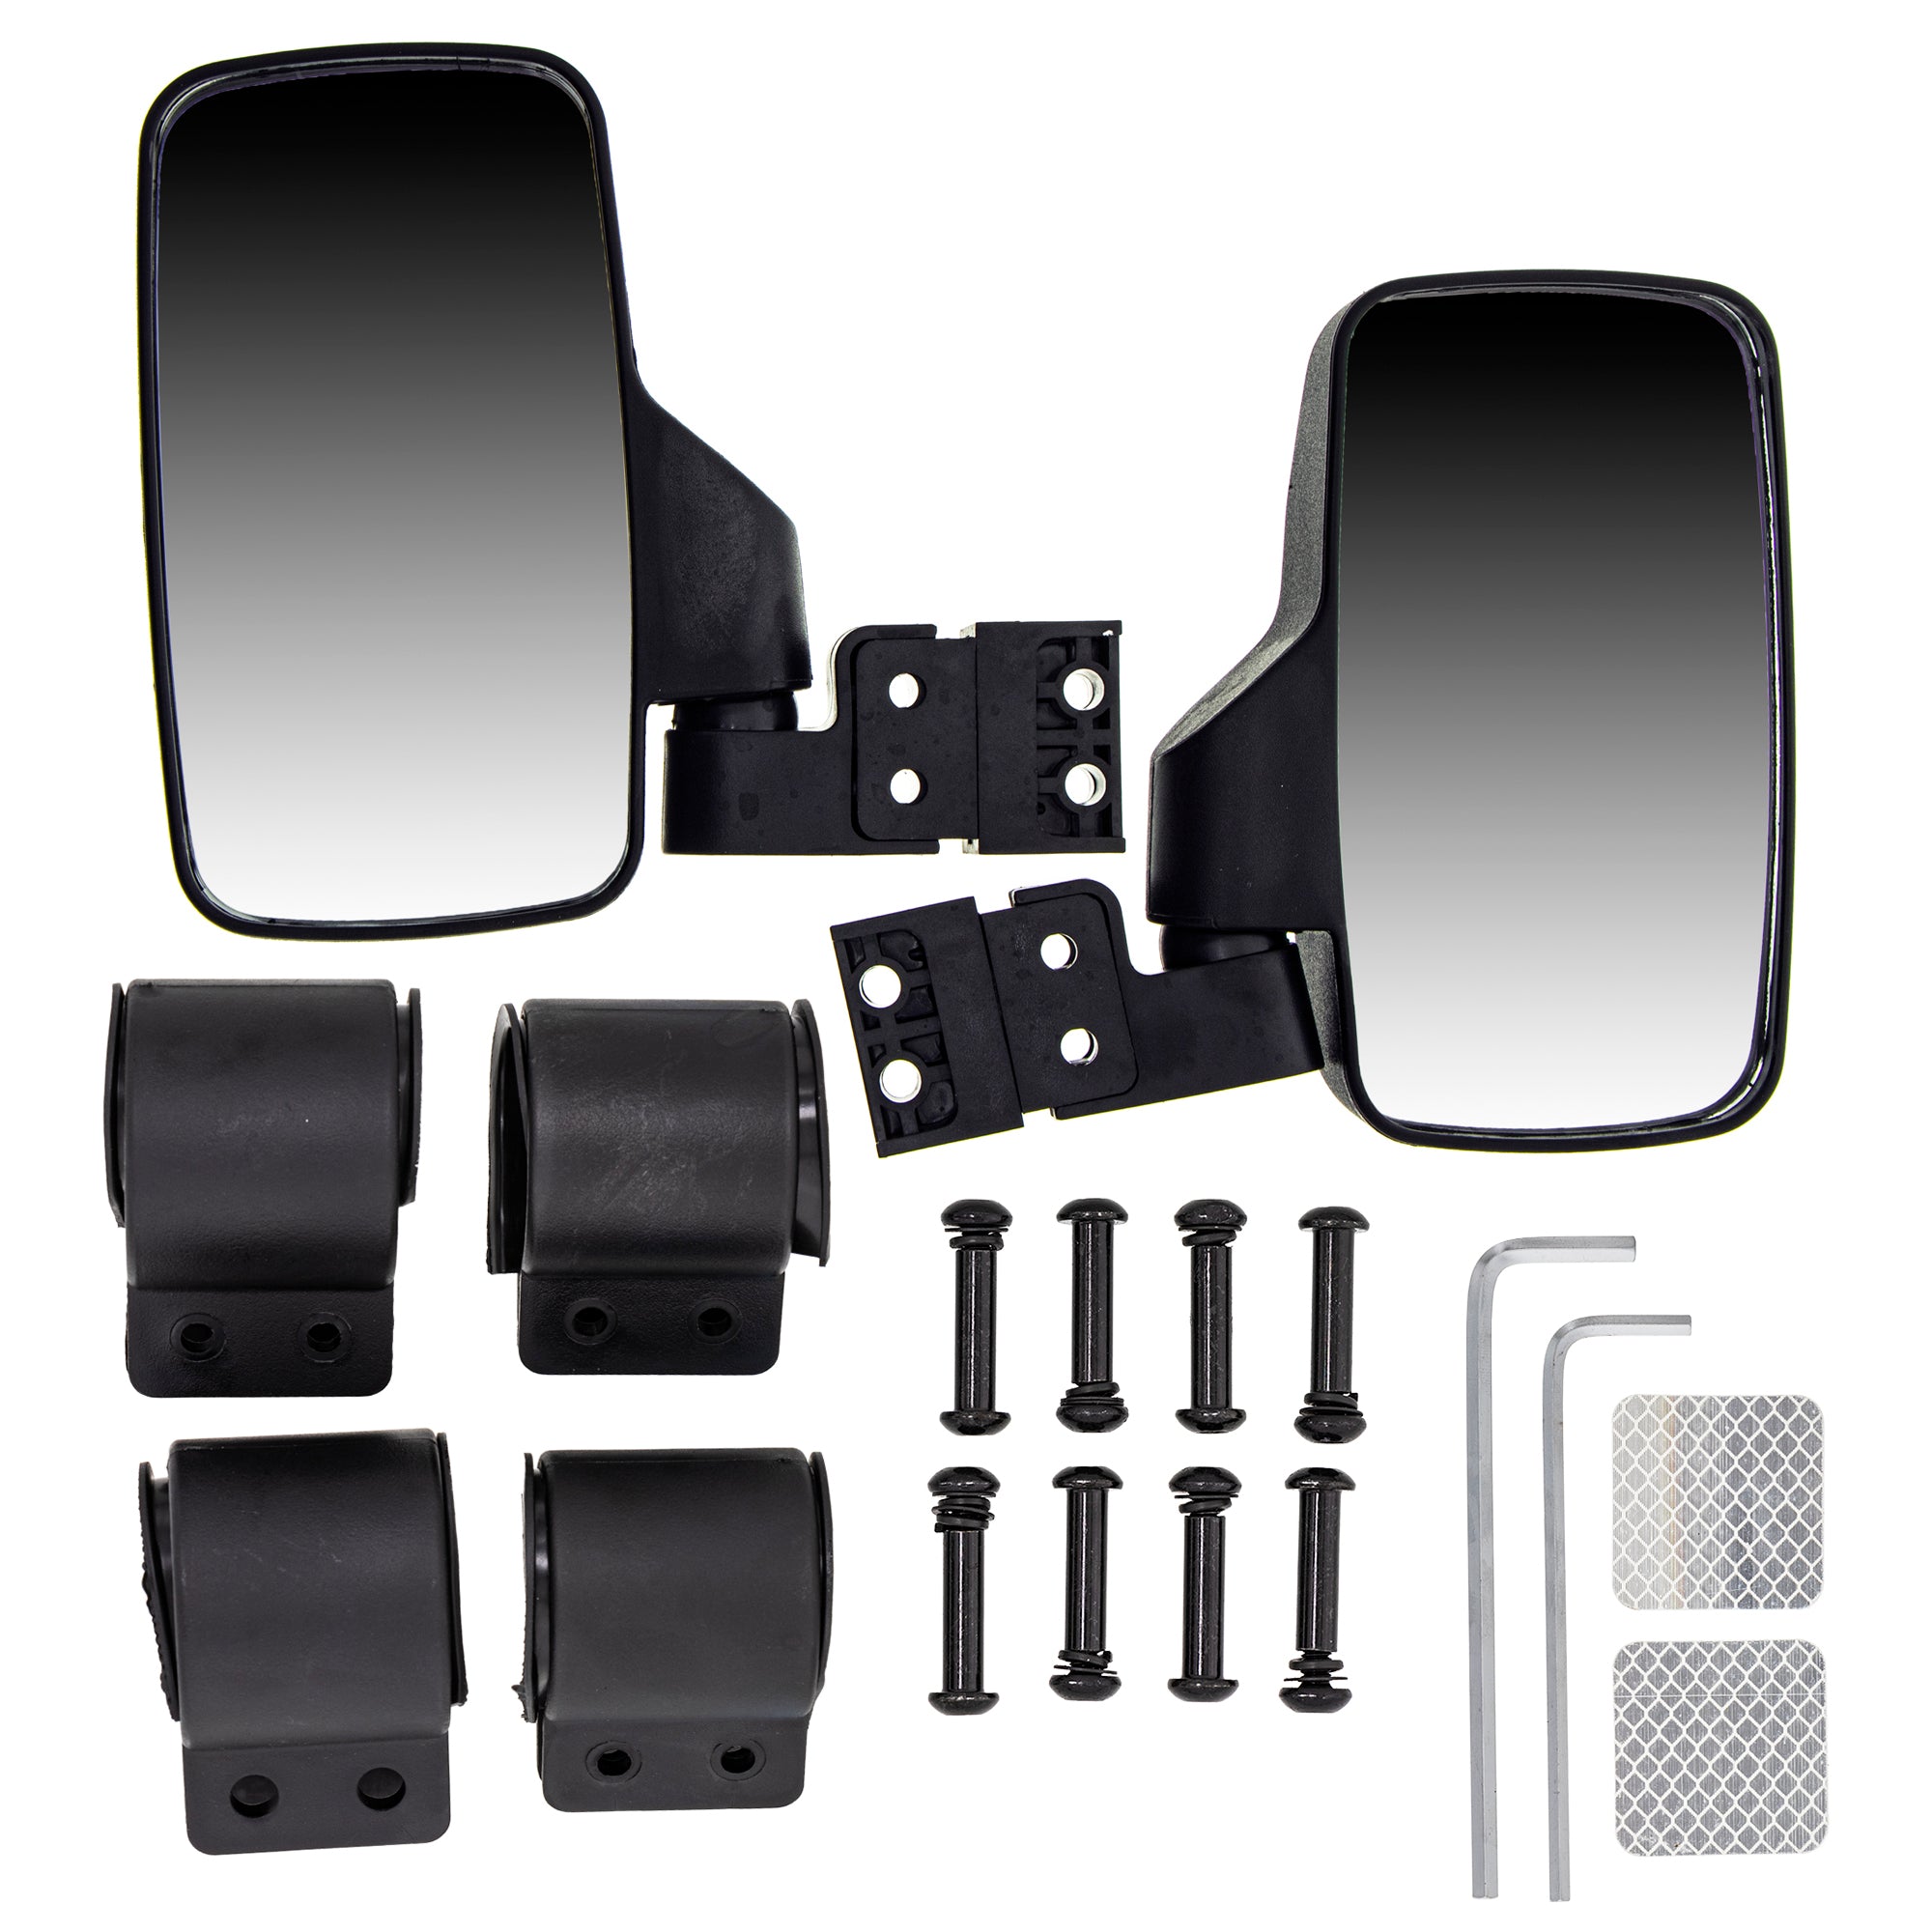 Black Break Away Side & Rear View Mirror For Polaris Can-Am Yamaha MK1002348